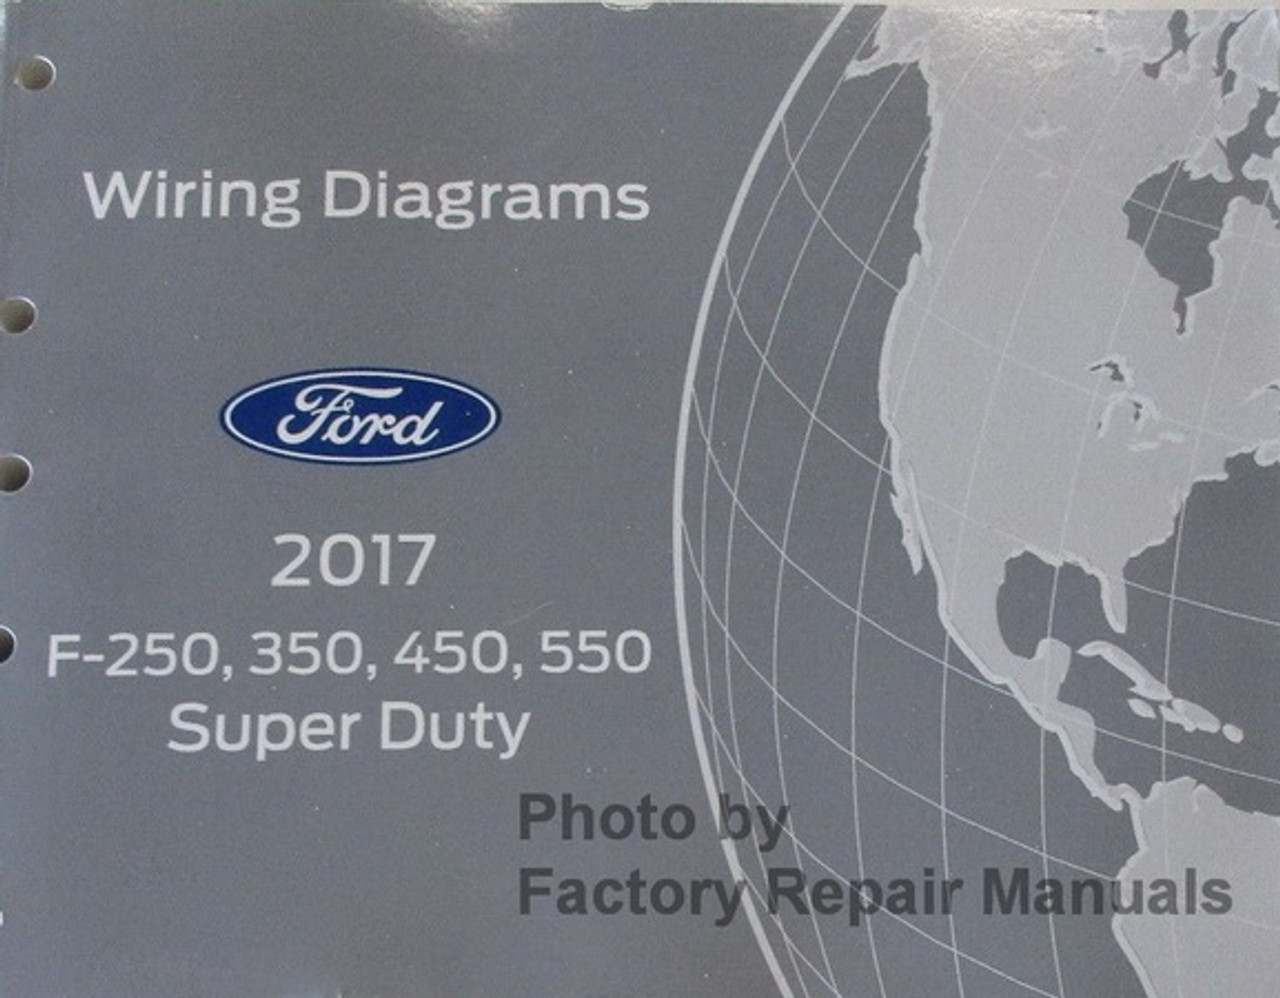 Ford F550 Wiring - Wiring Diagram